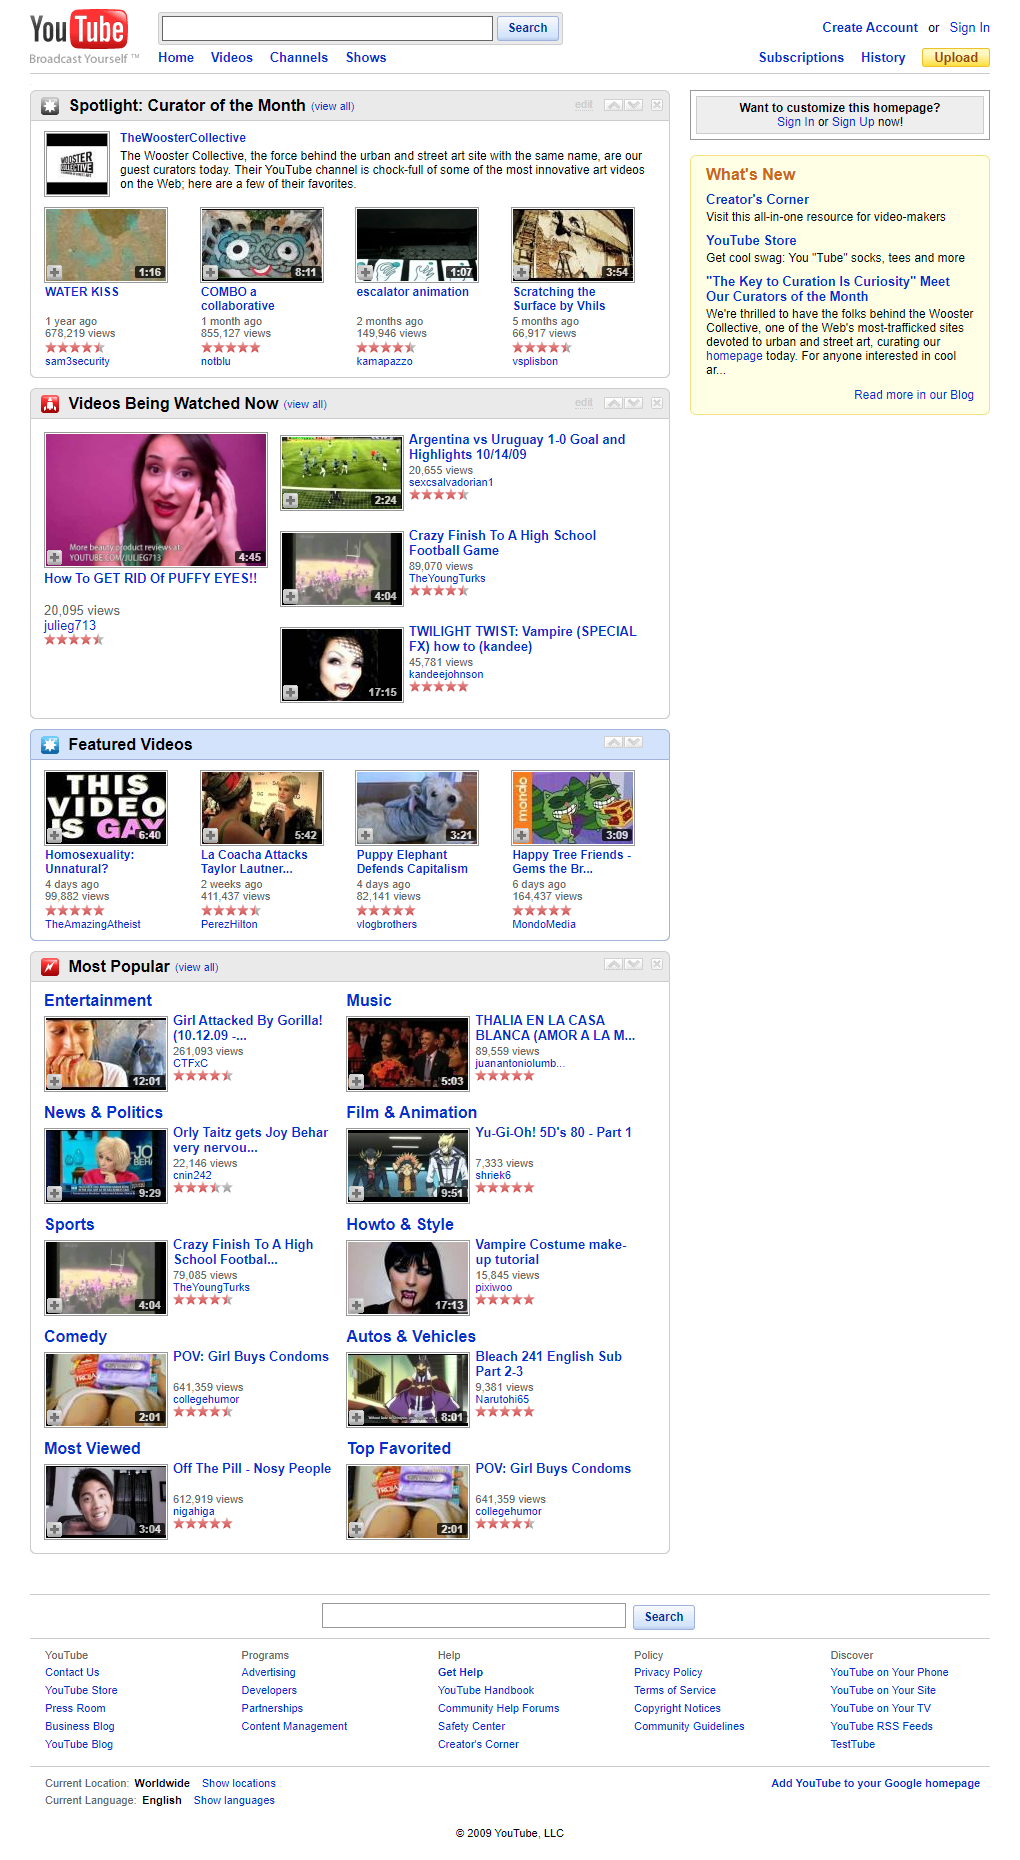 YouTube website in 2009